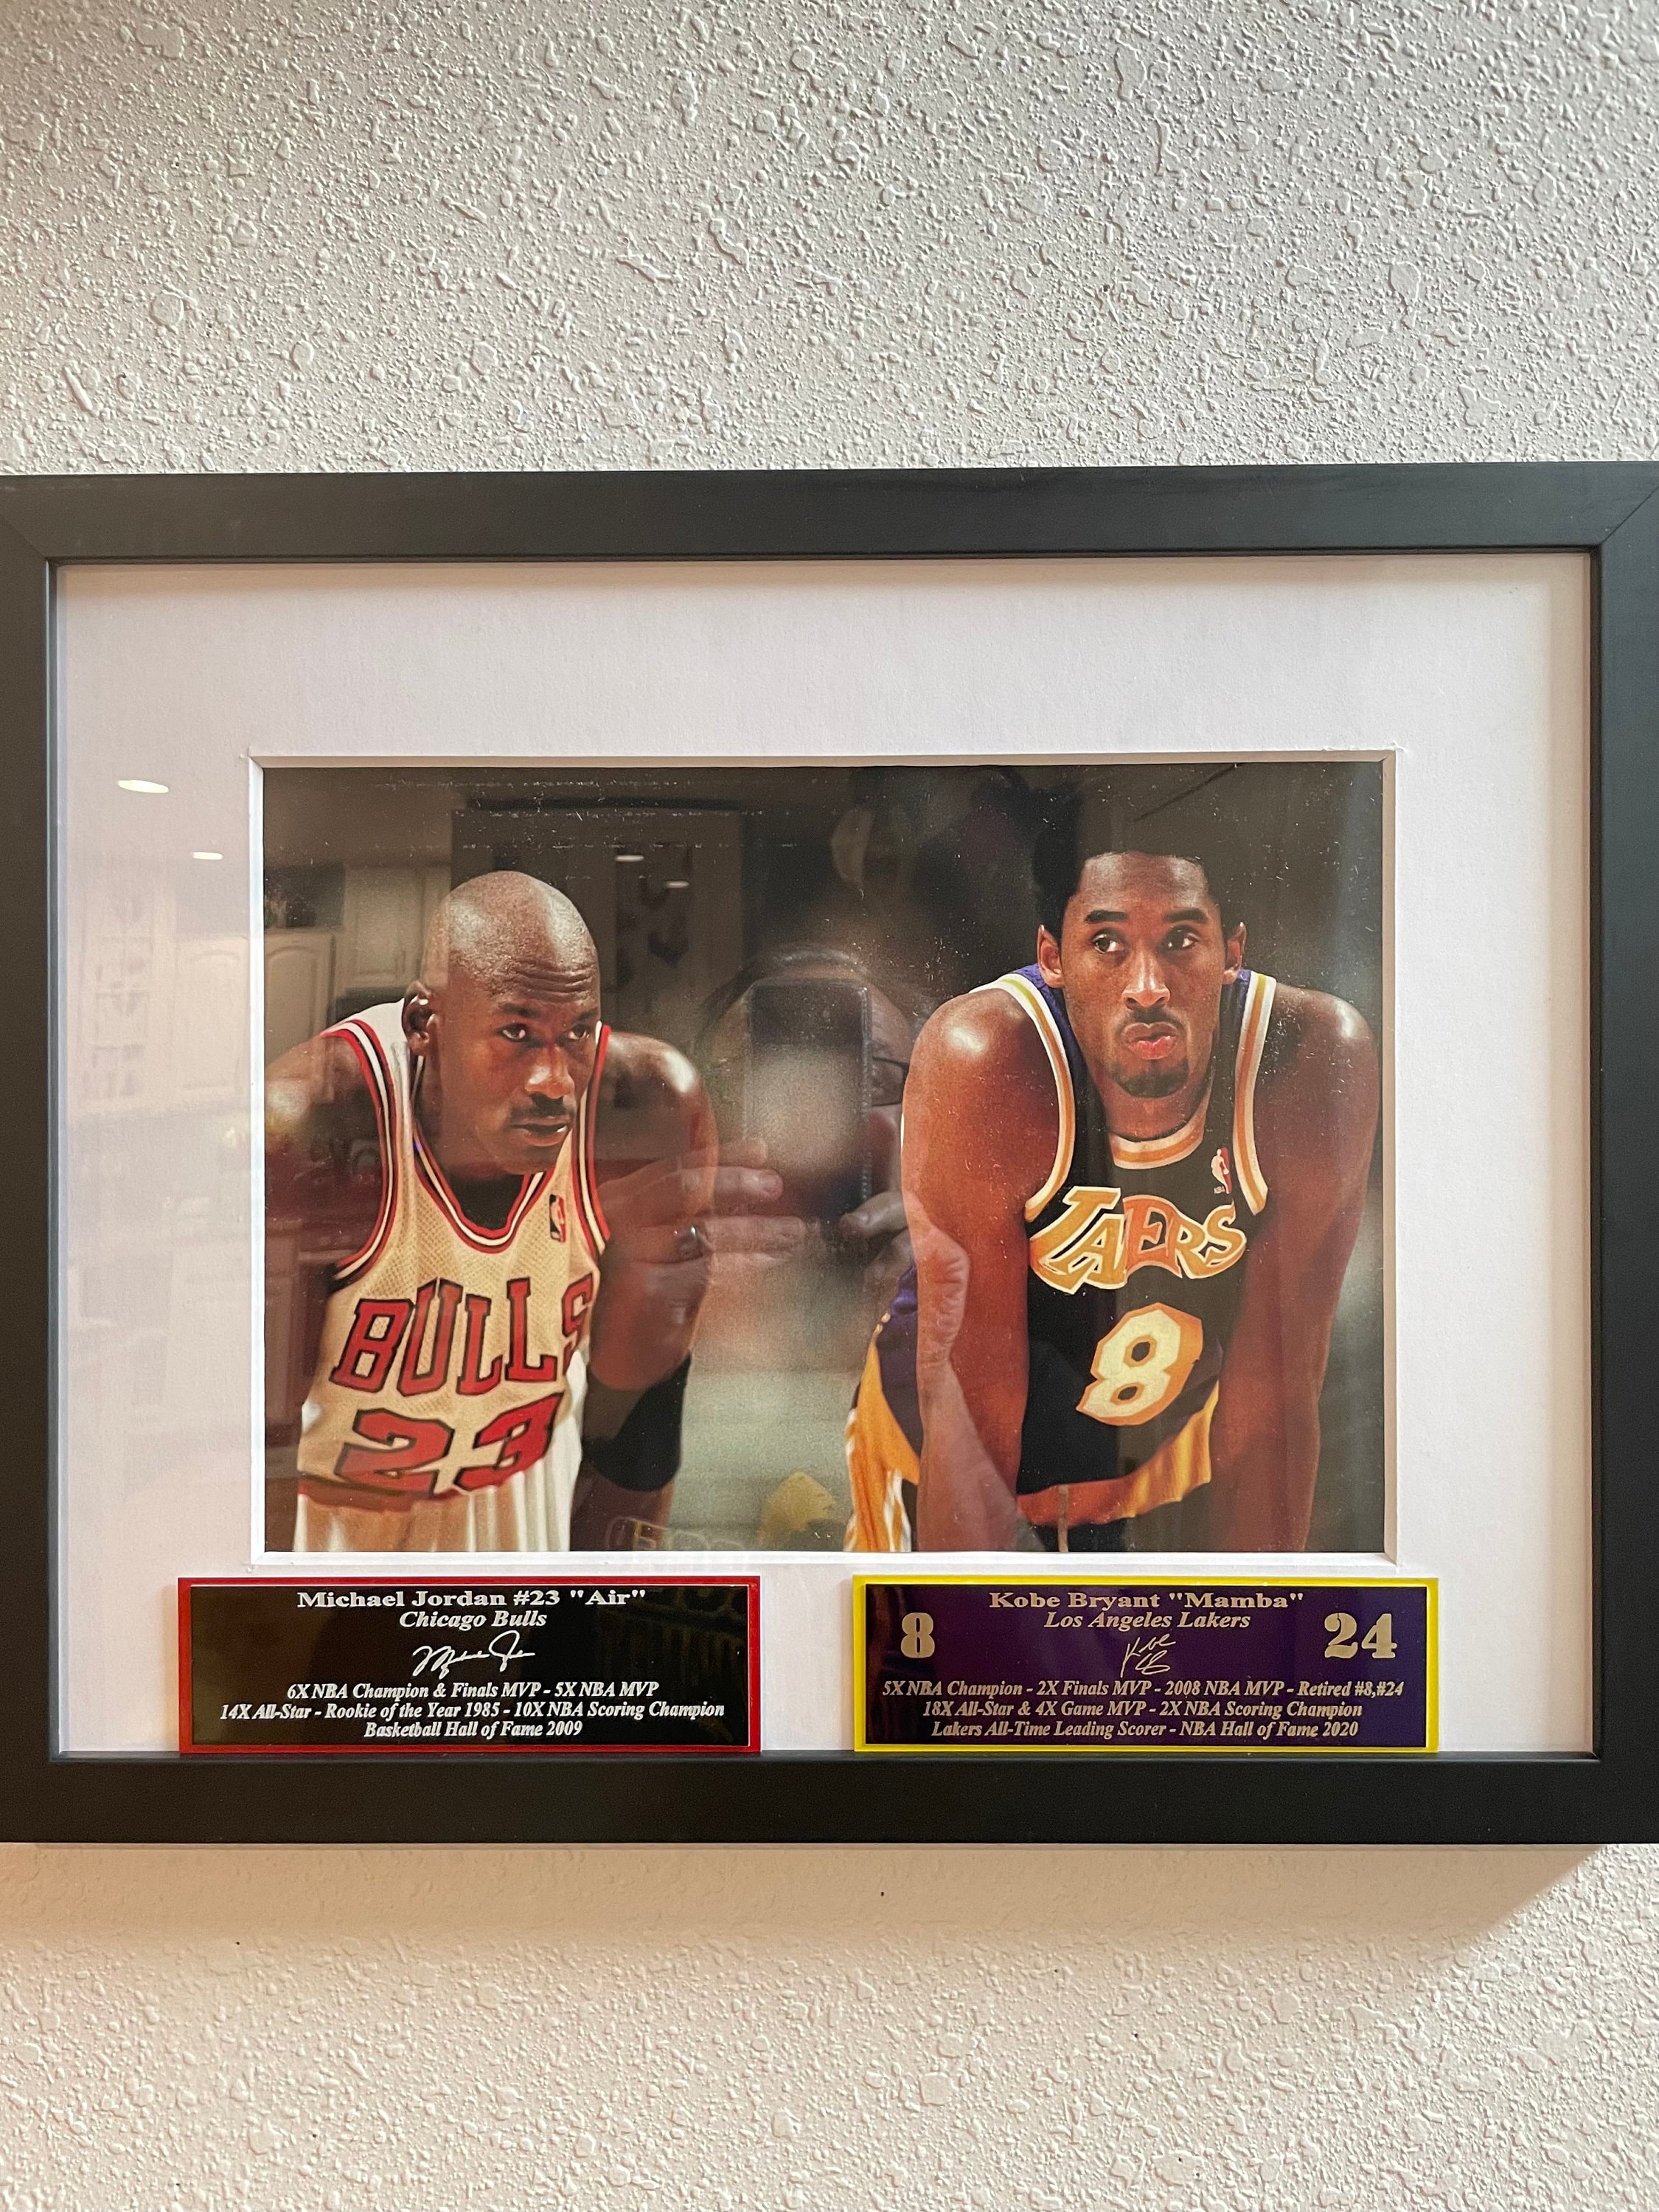 Kobe Bryant Basketball Card MVP 2008 Game 99 Los Angeles Lakers